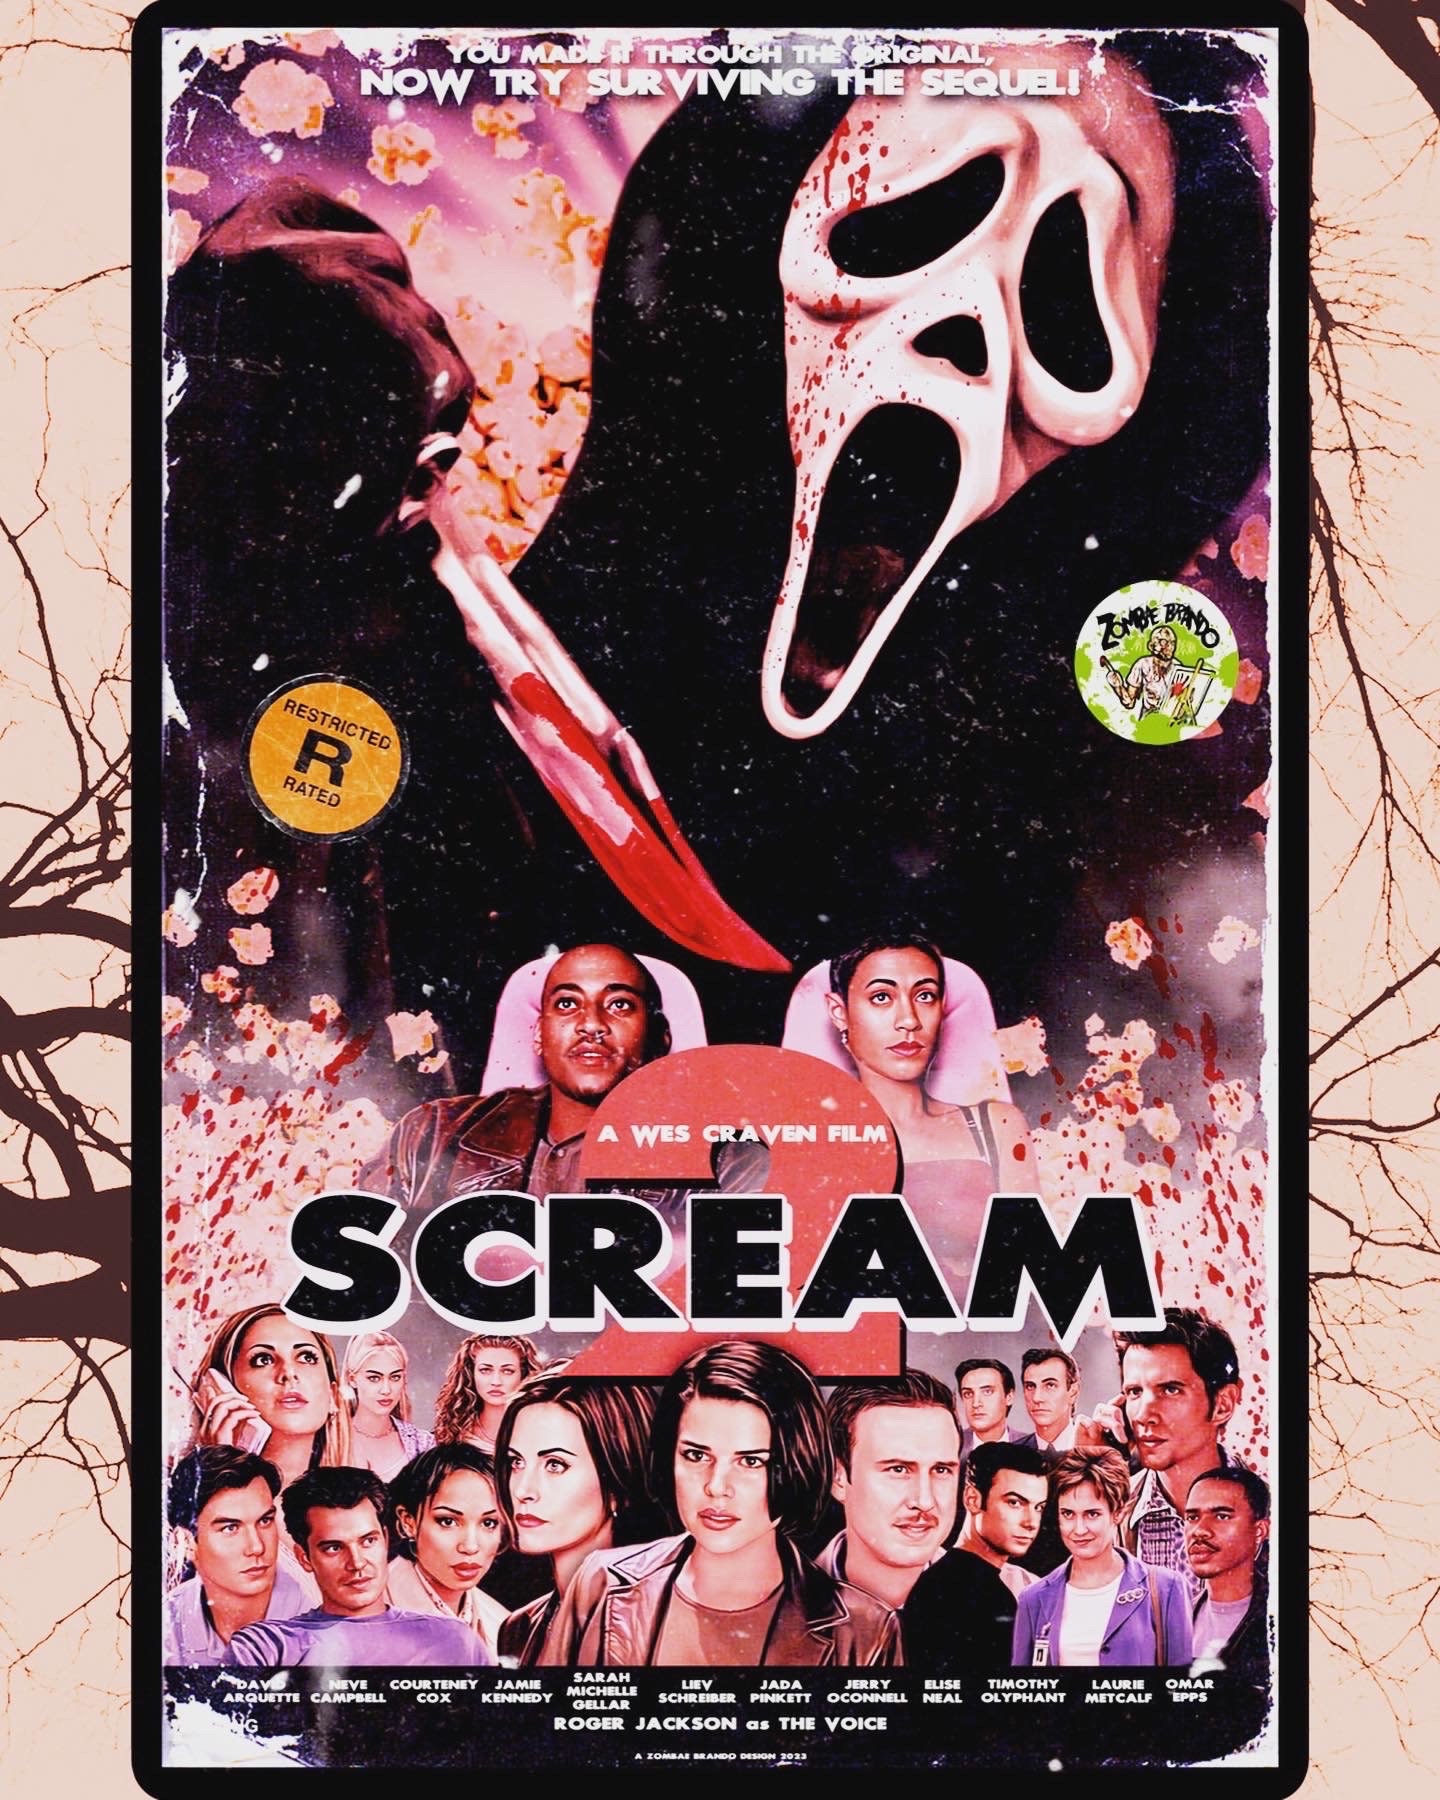 Scream print by The Usher designs